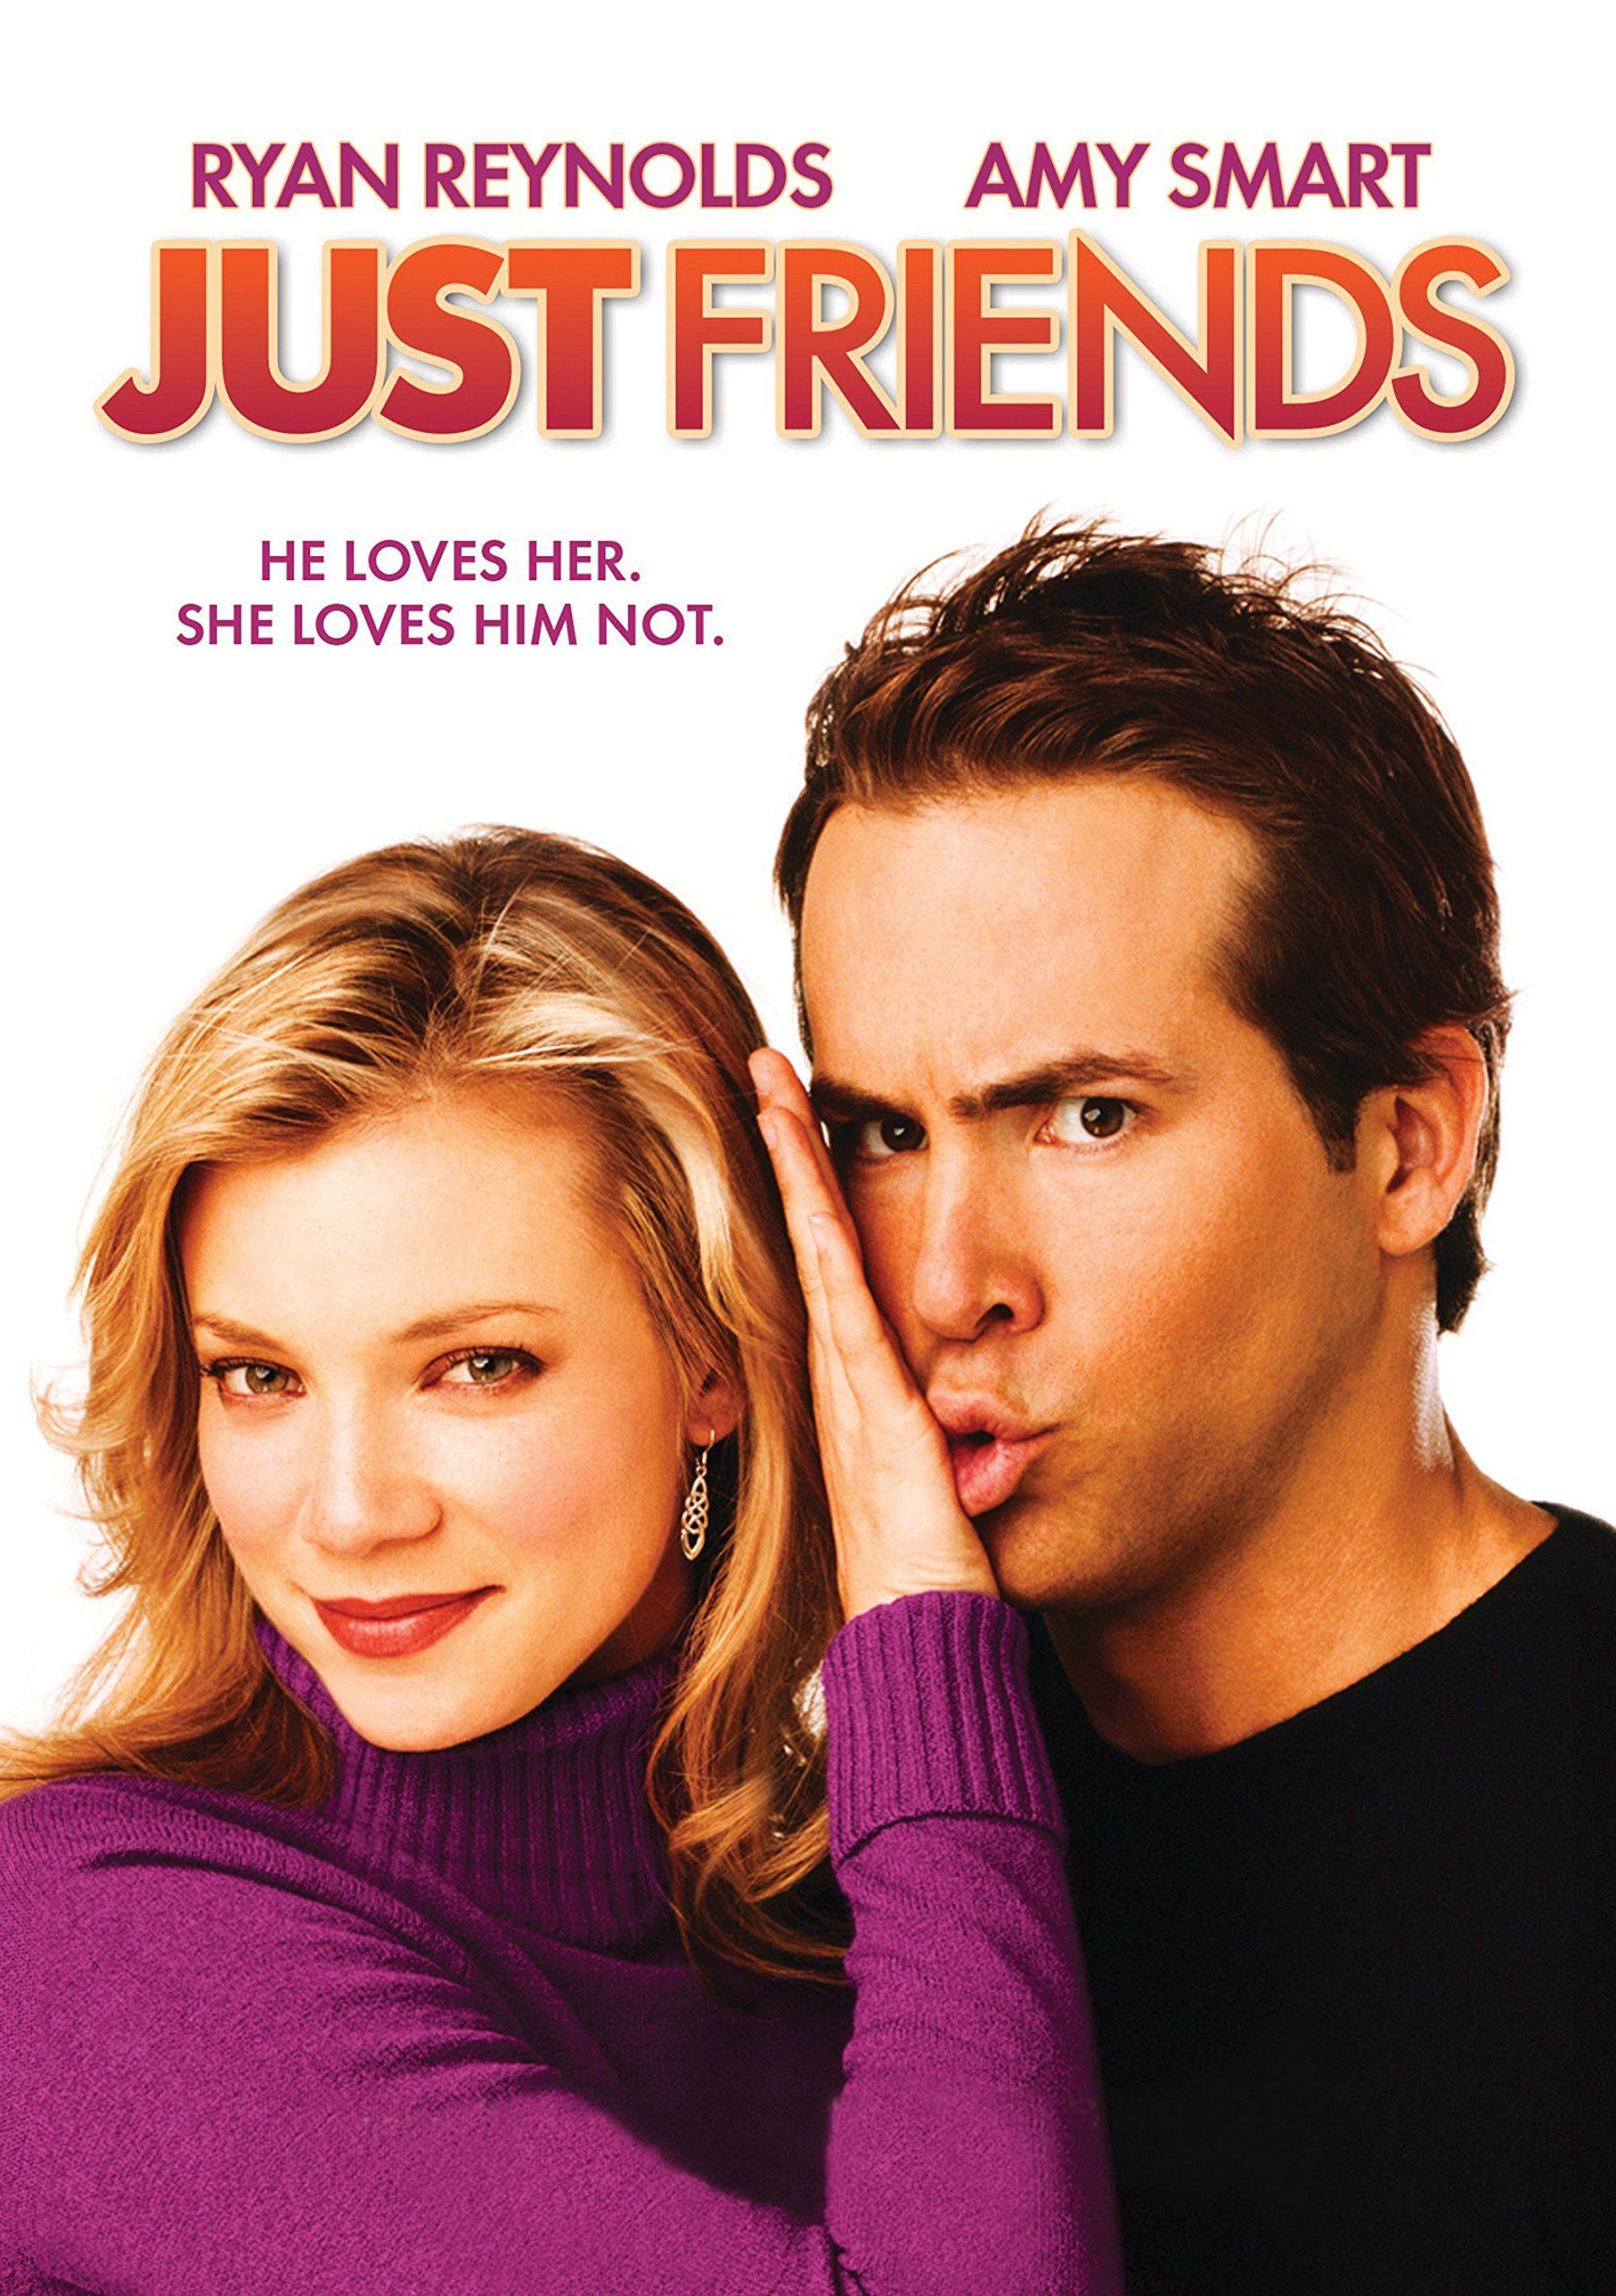 Just friends movie amy smart upskirt